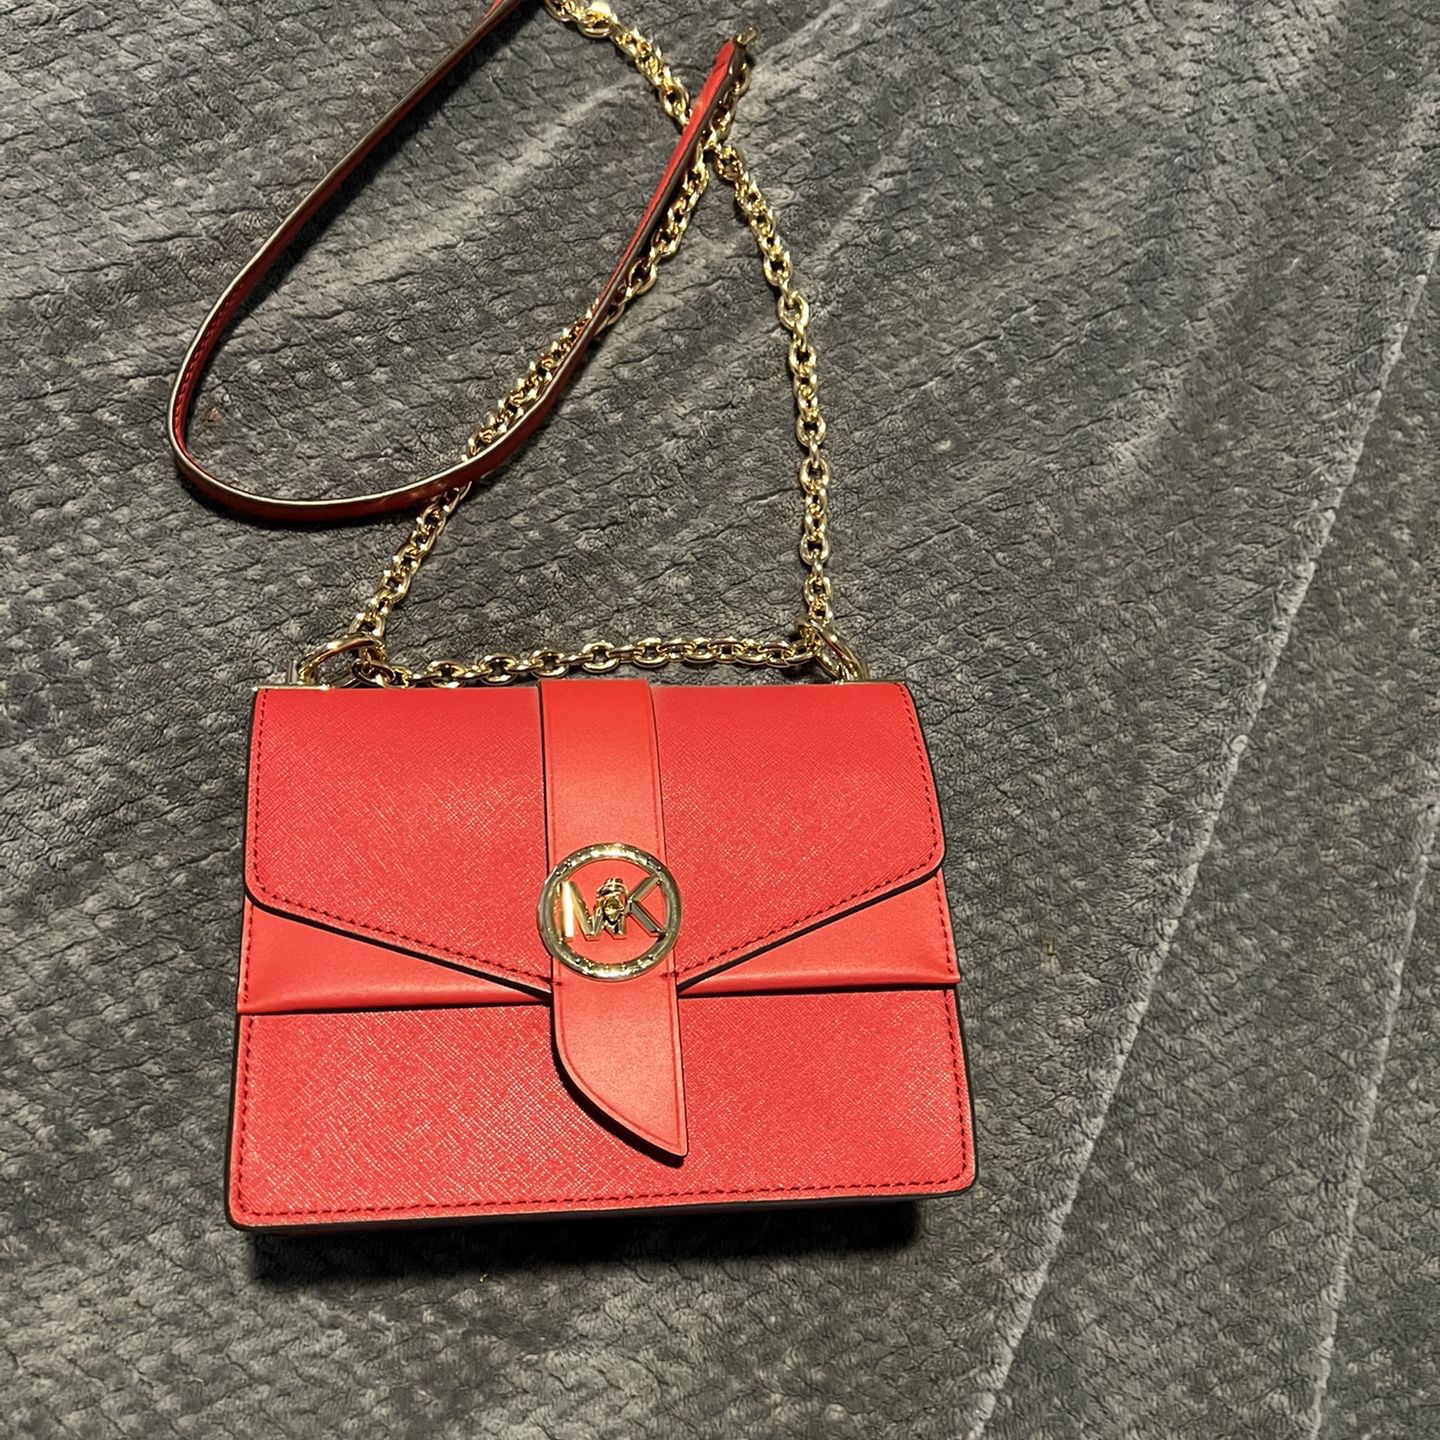 MICHAEL KORS  Red Small Saffiano Leather Crossbody Bag